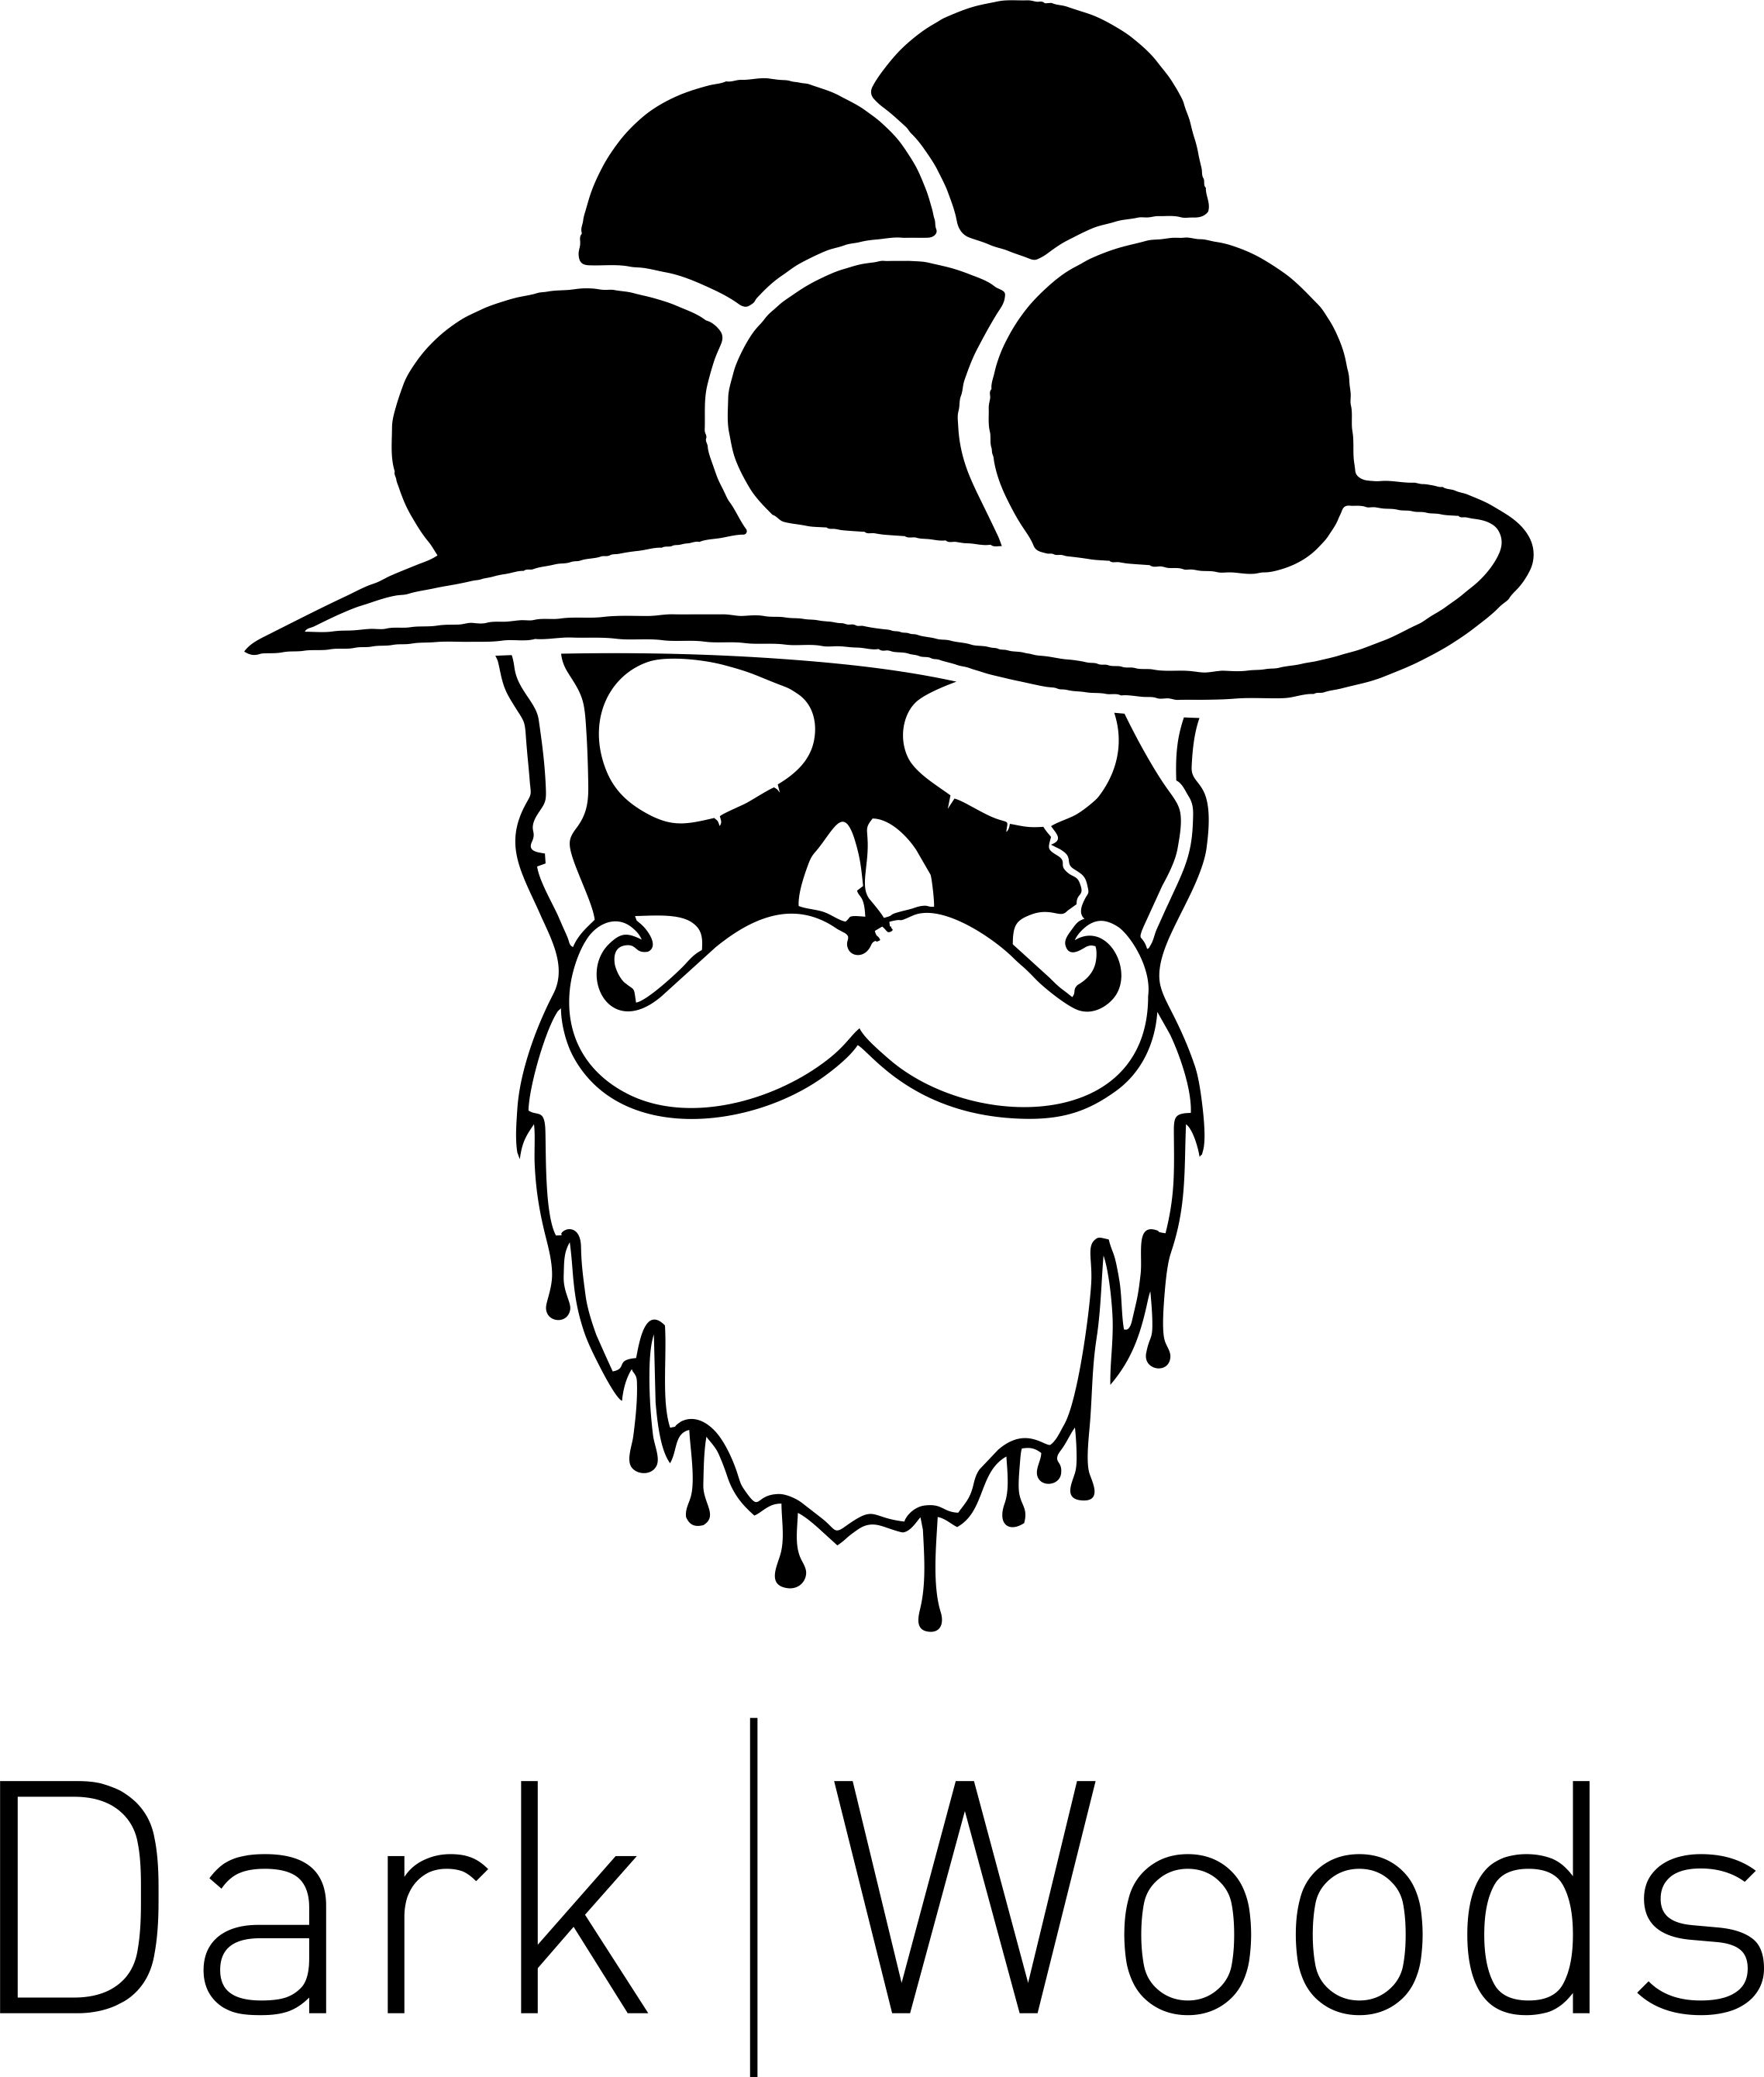 DarkWoods